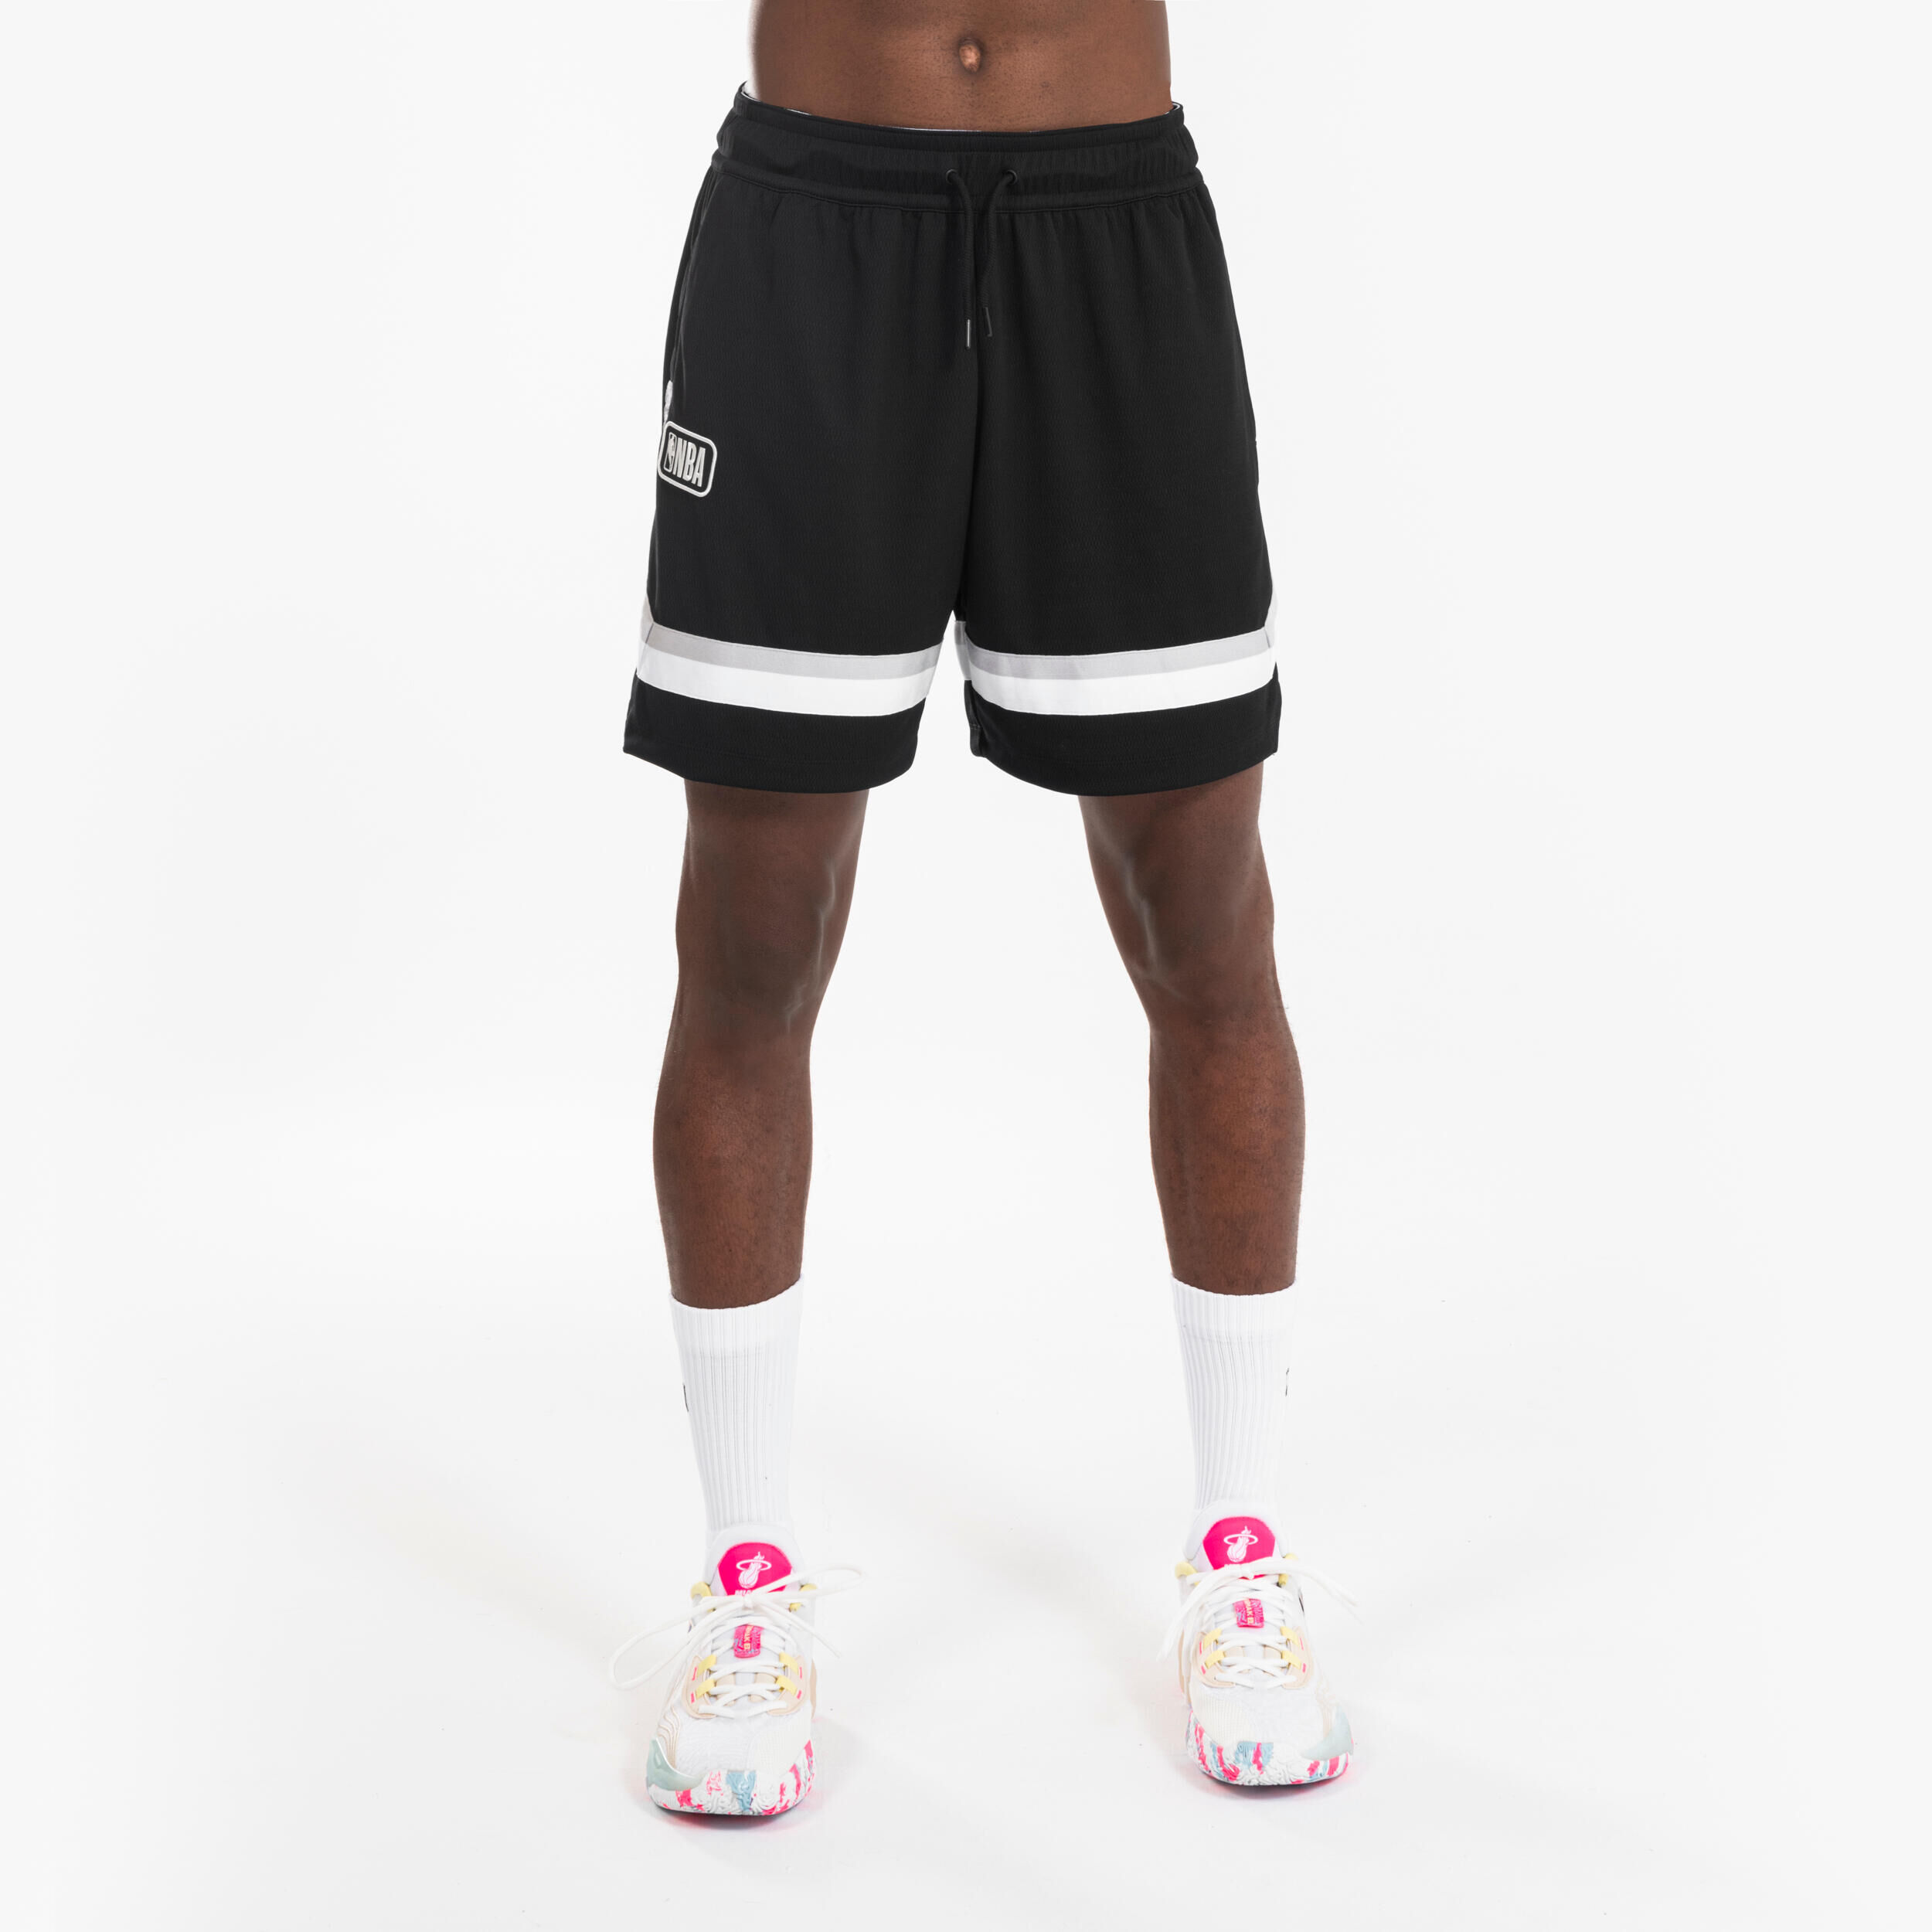 TARMAK Men's/Women's Basketball Shorts NBA SH 900 - Black